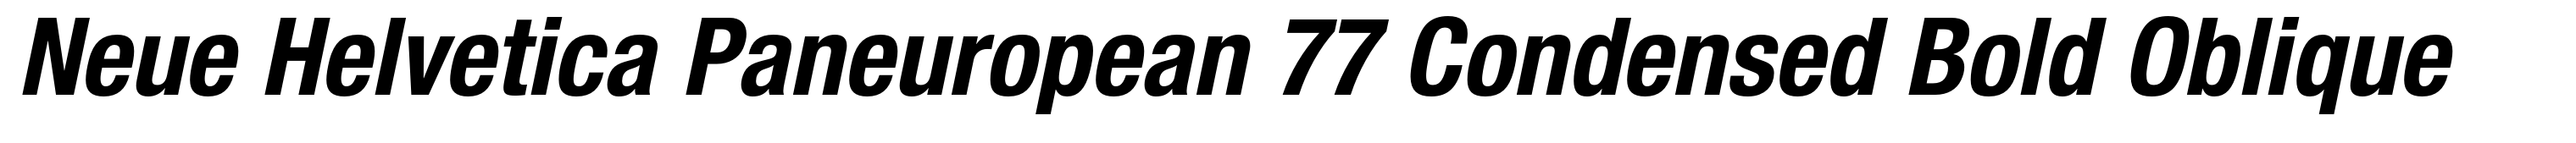 Neue Helvetica Paneuropean 77 Condensed Bold Oblique